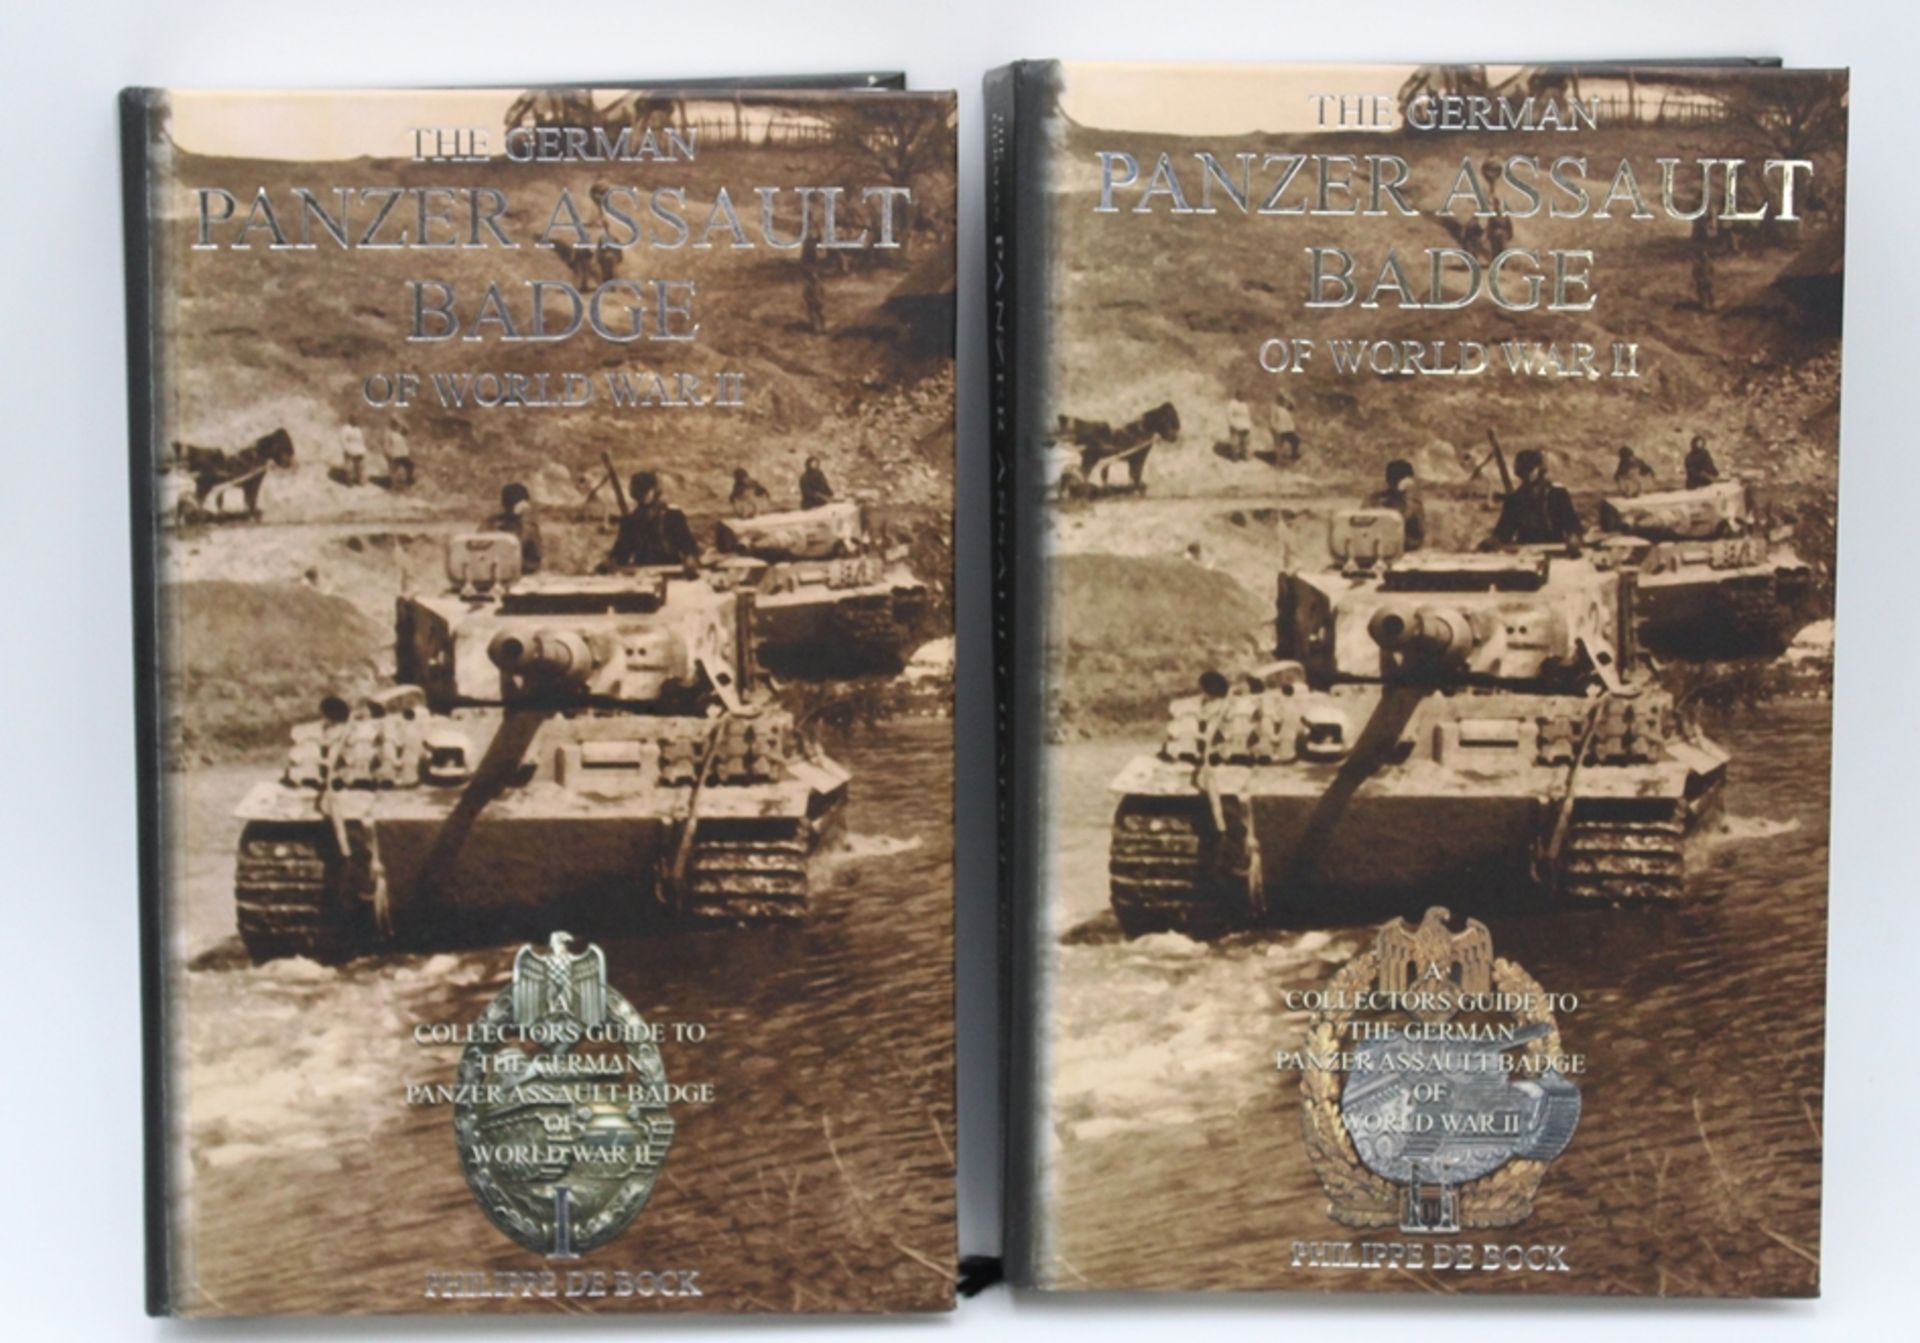 Phillipe de Bock ,The German Panzer Assault Badge,  Collector's Guide - 1st Edition 2009,  Vol. I &